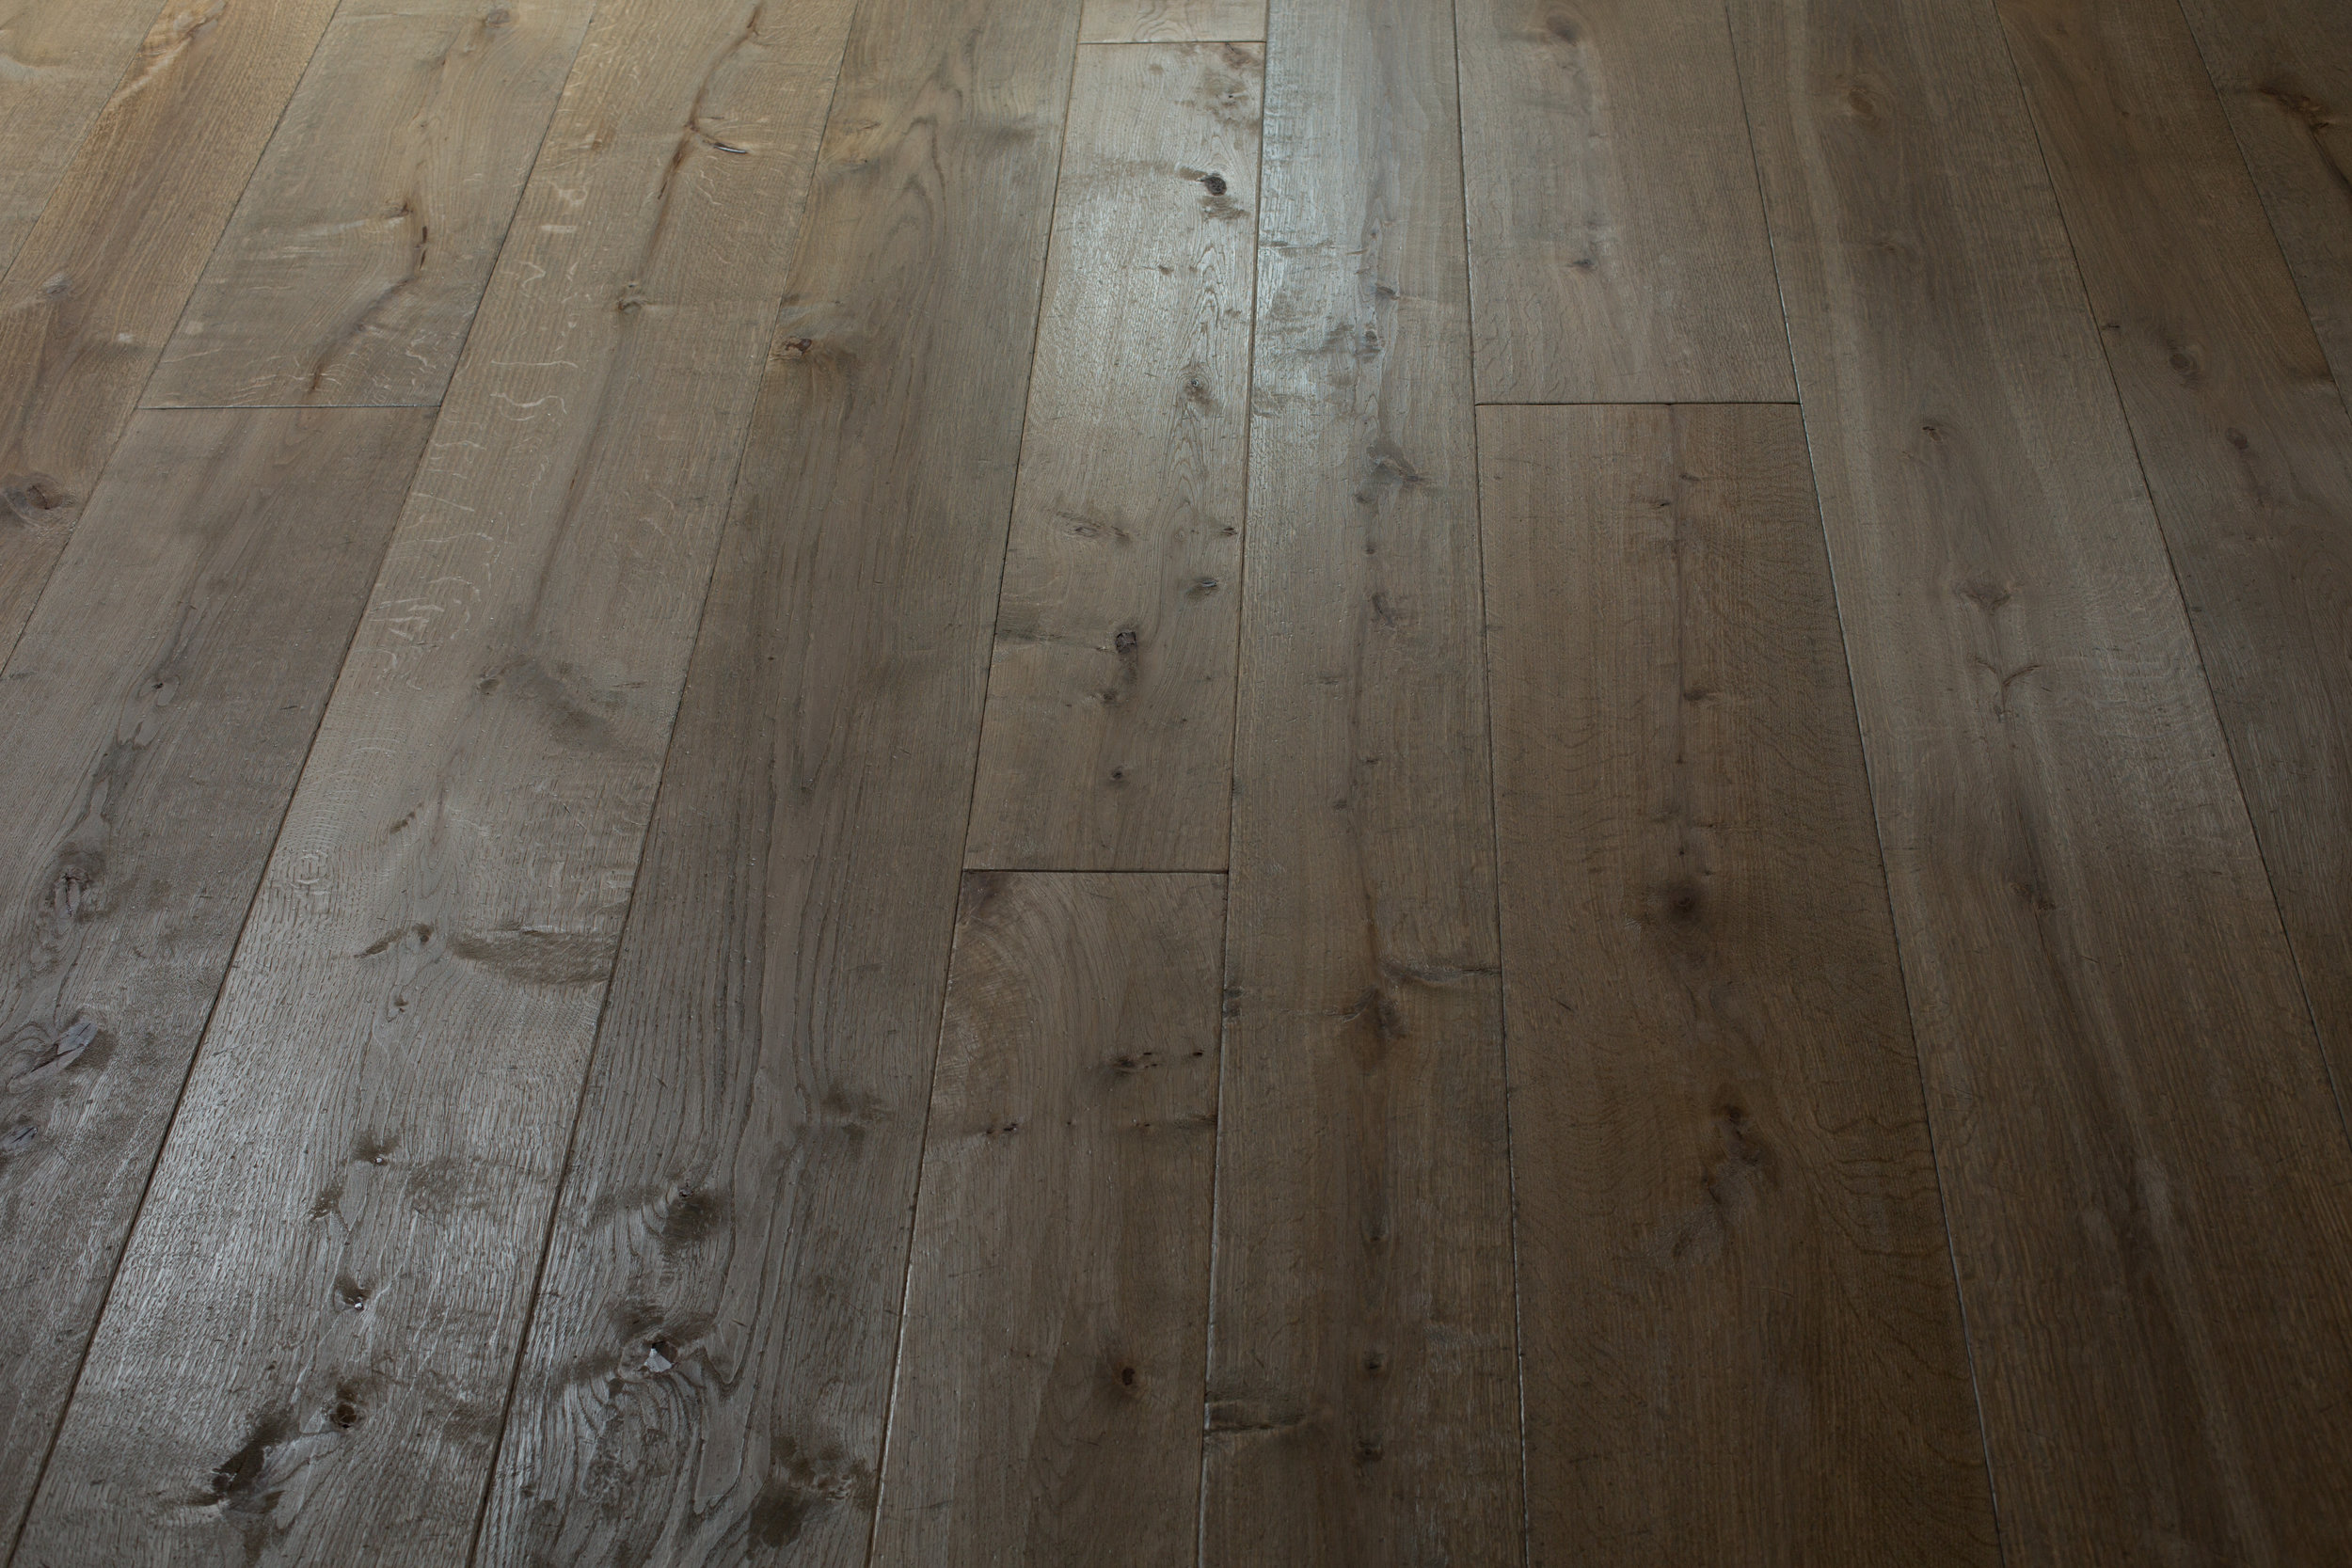 Hard wooden flooring